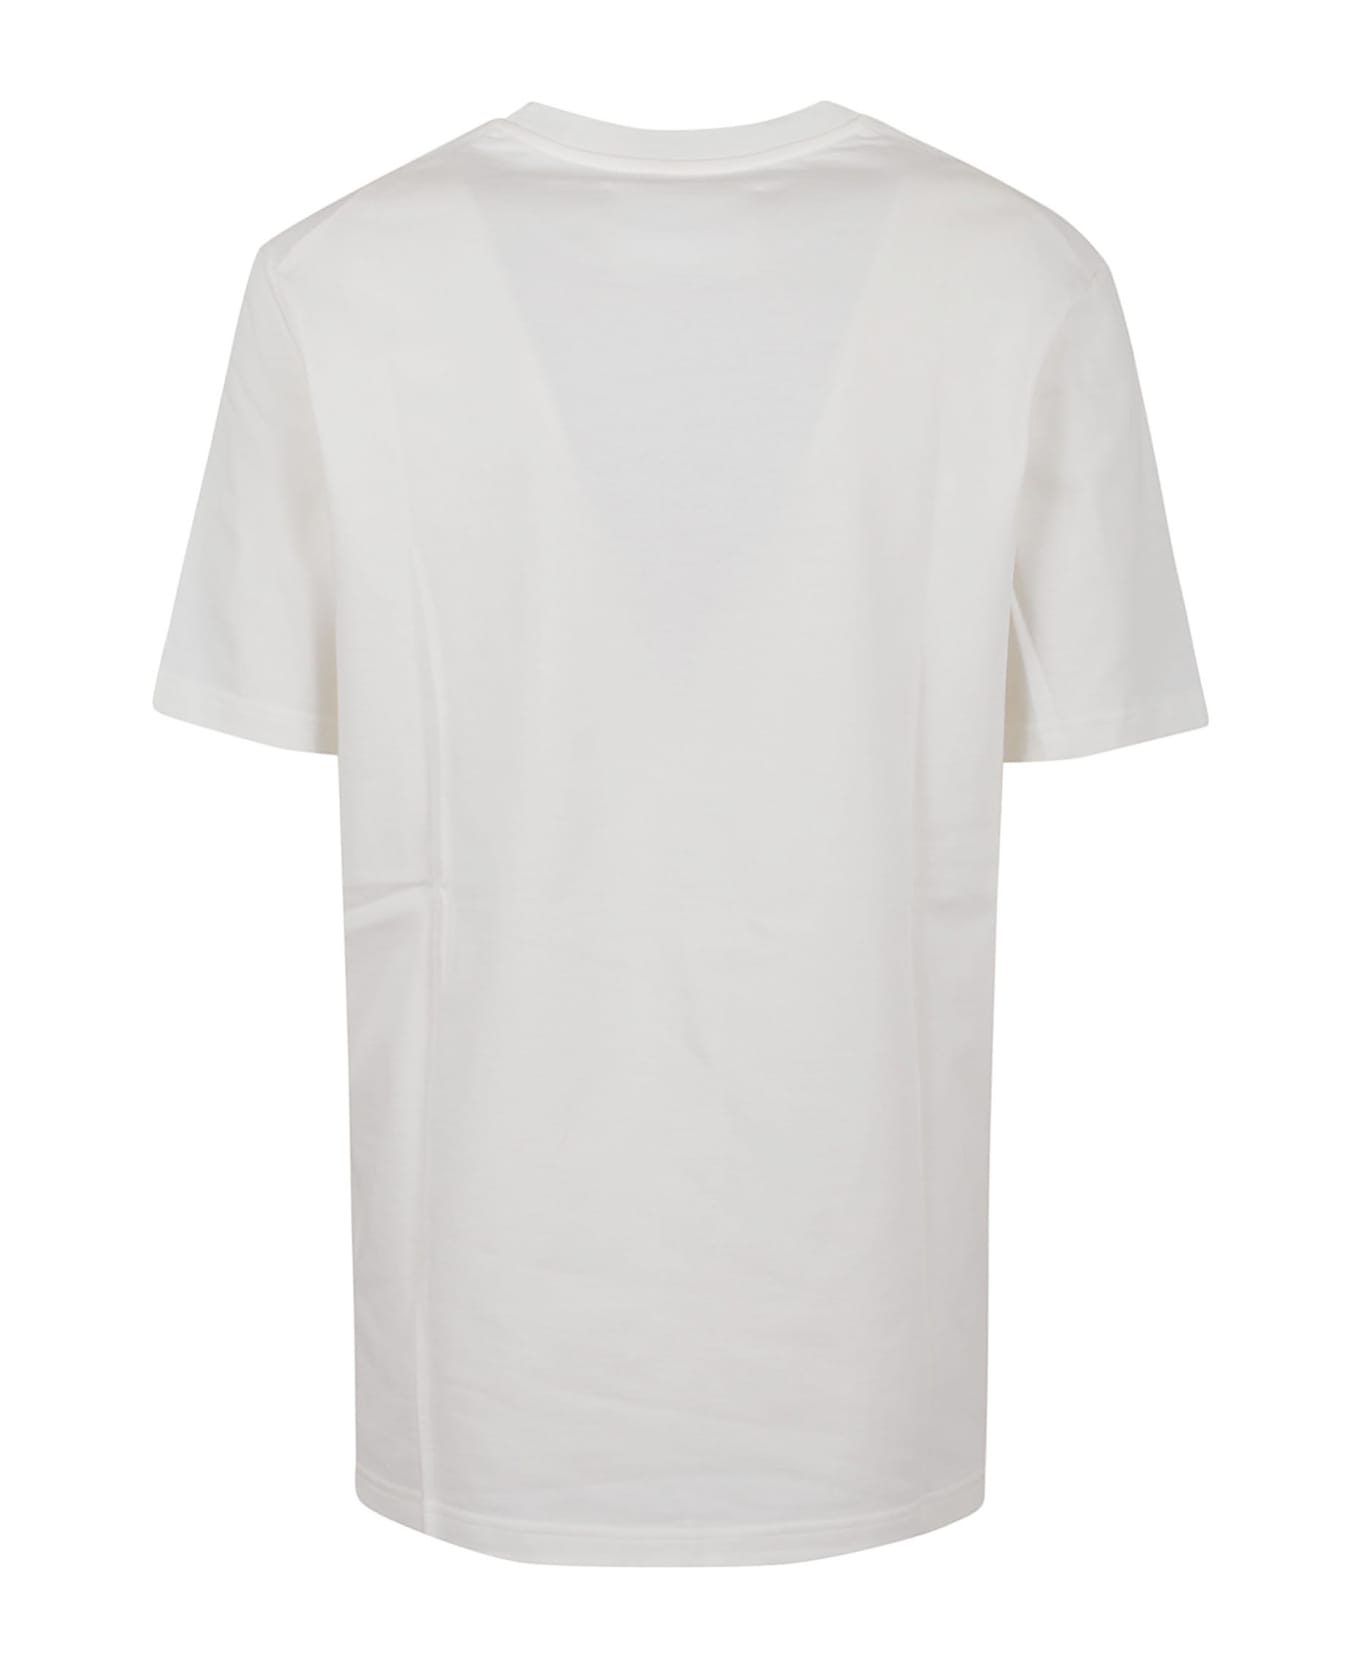 Jil Sander T-shirt Ss - Porcelain Tシャツ